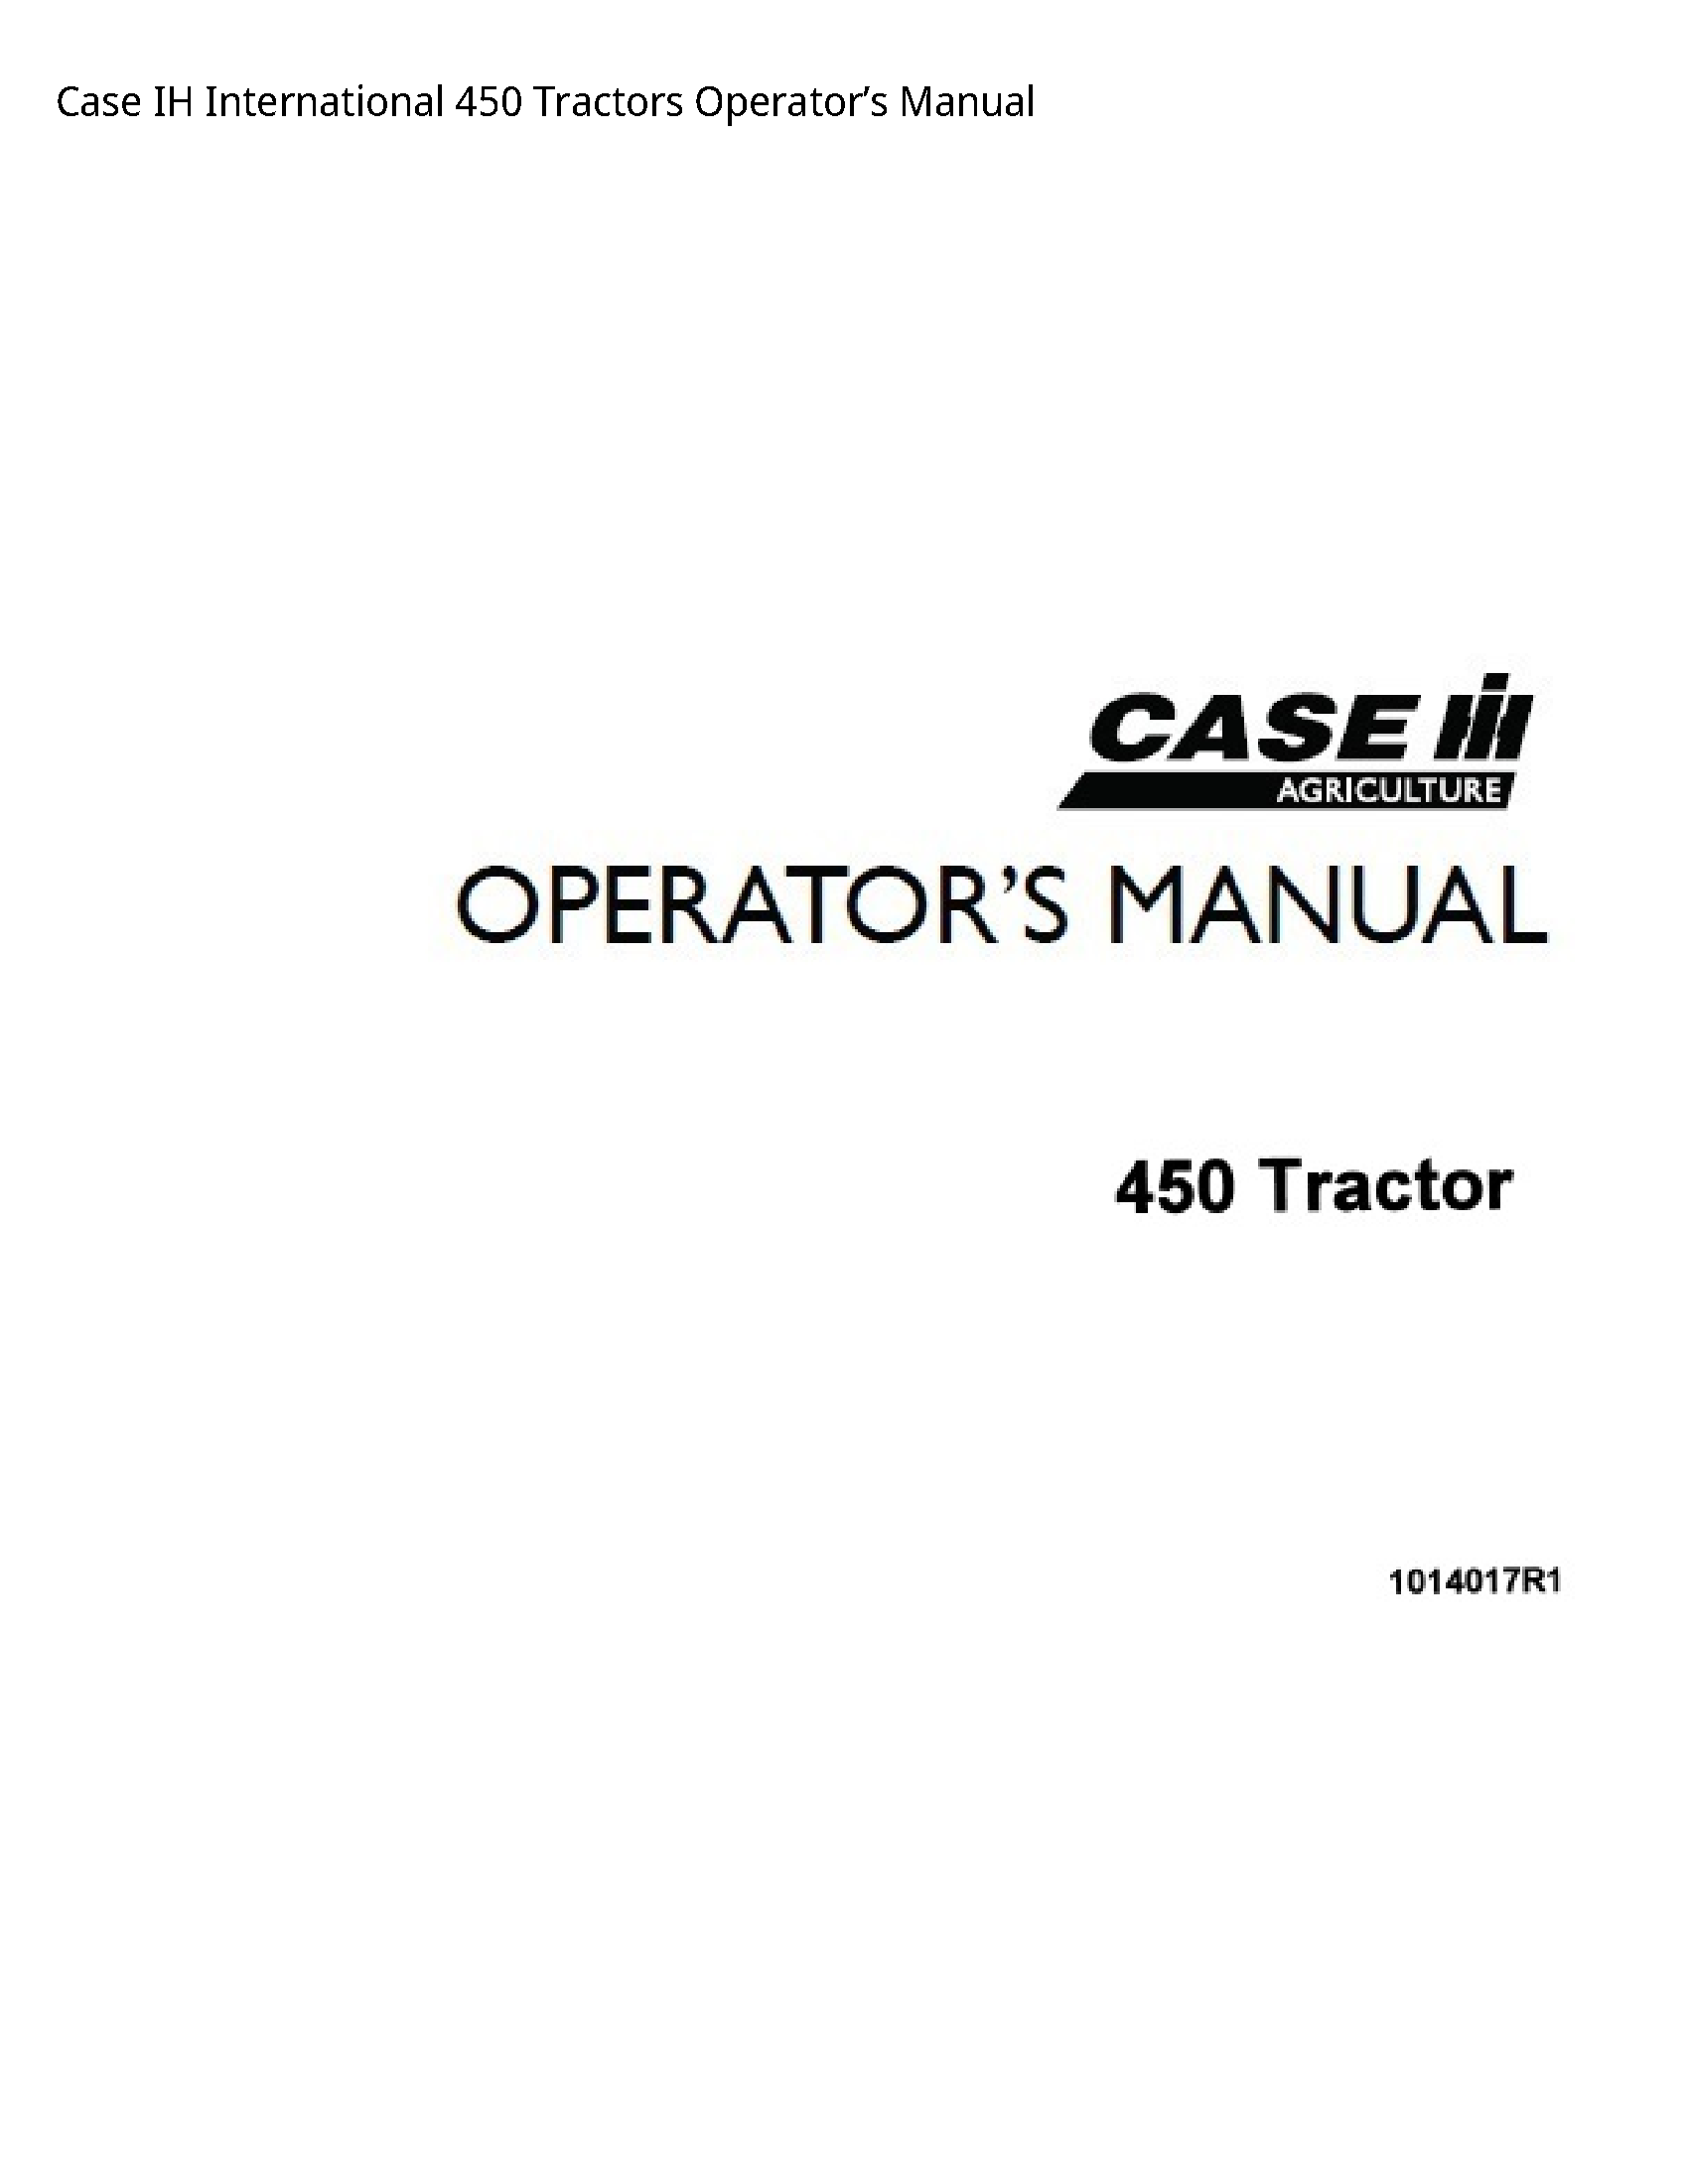 Case/Case IH 450 IH International Tractors Operator’s manual